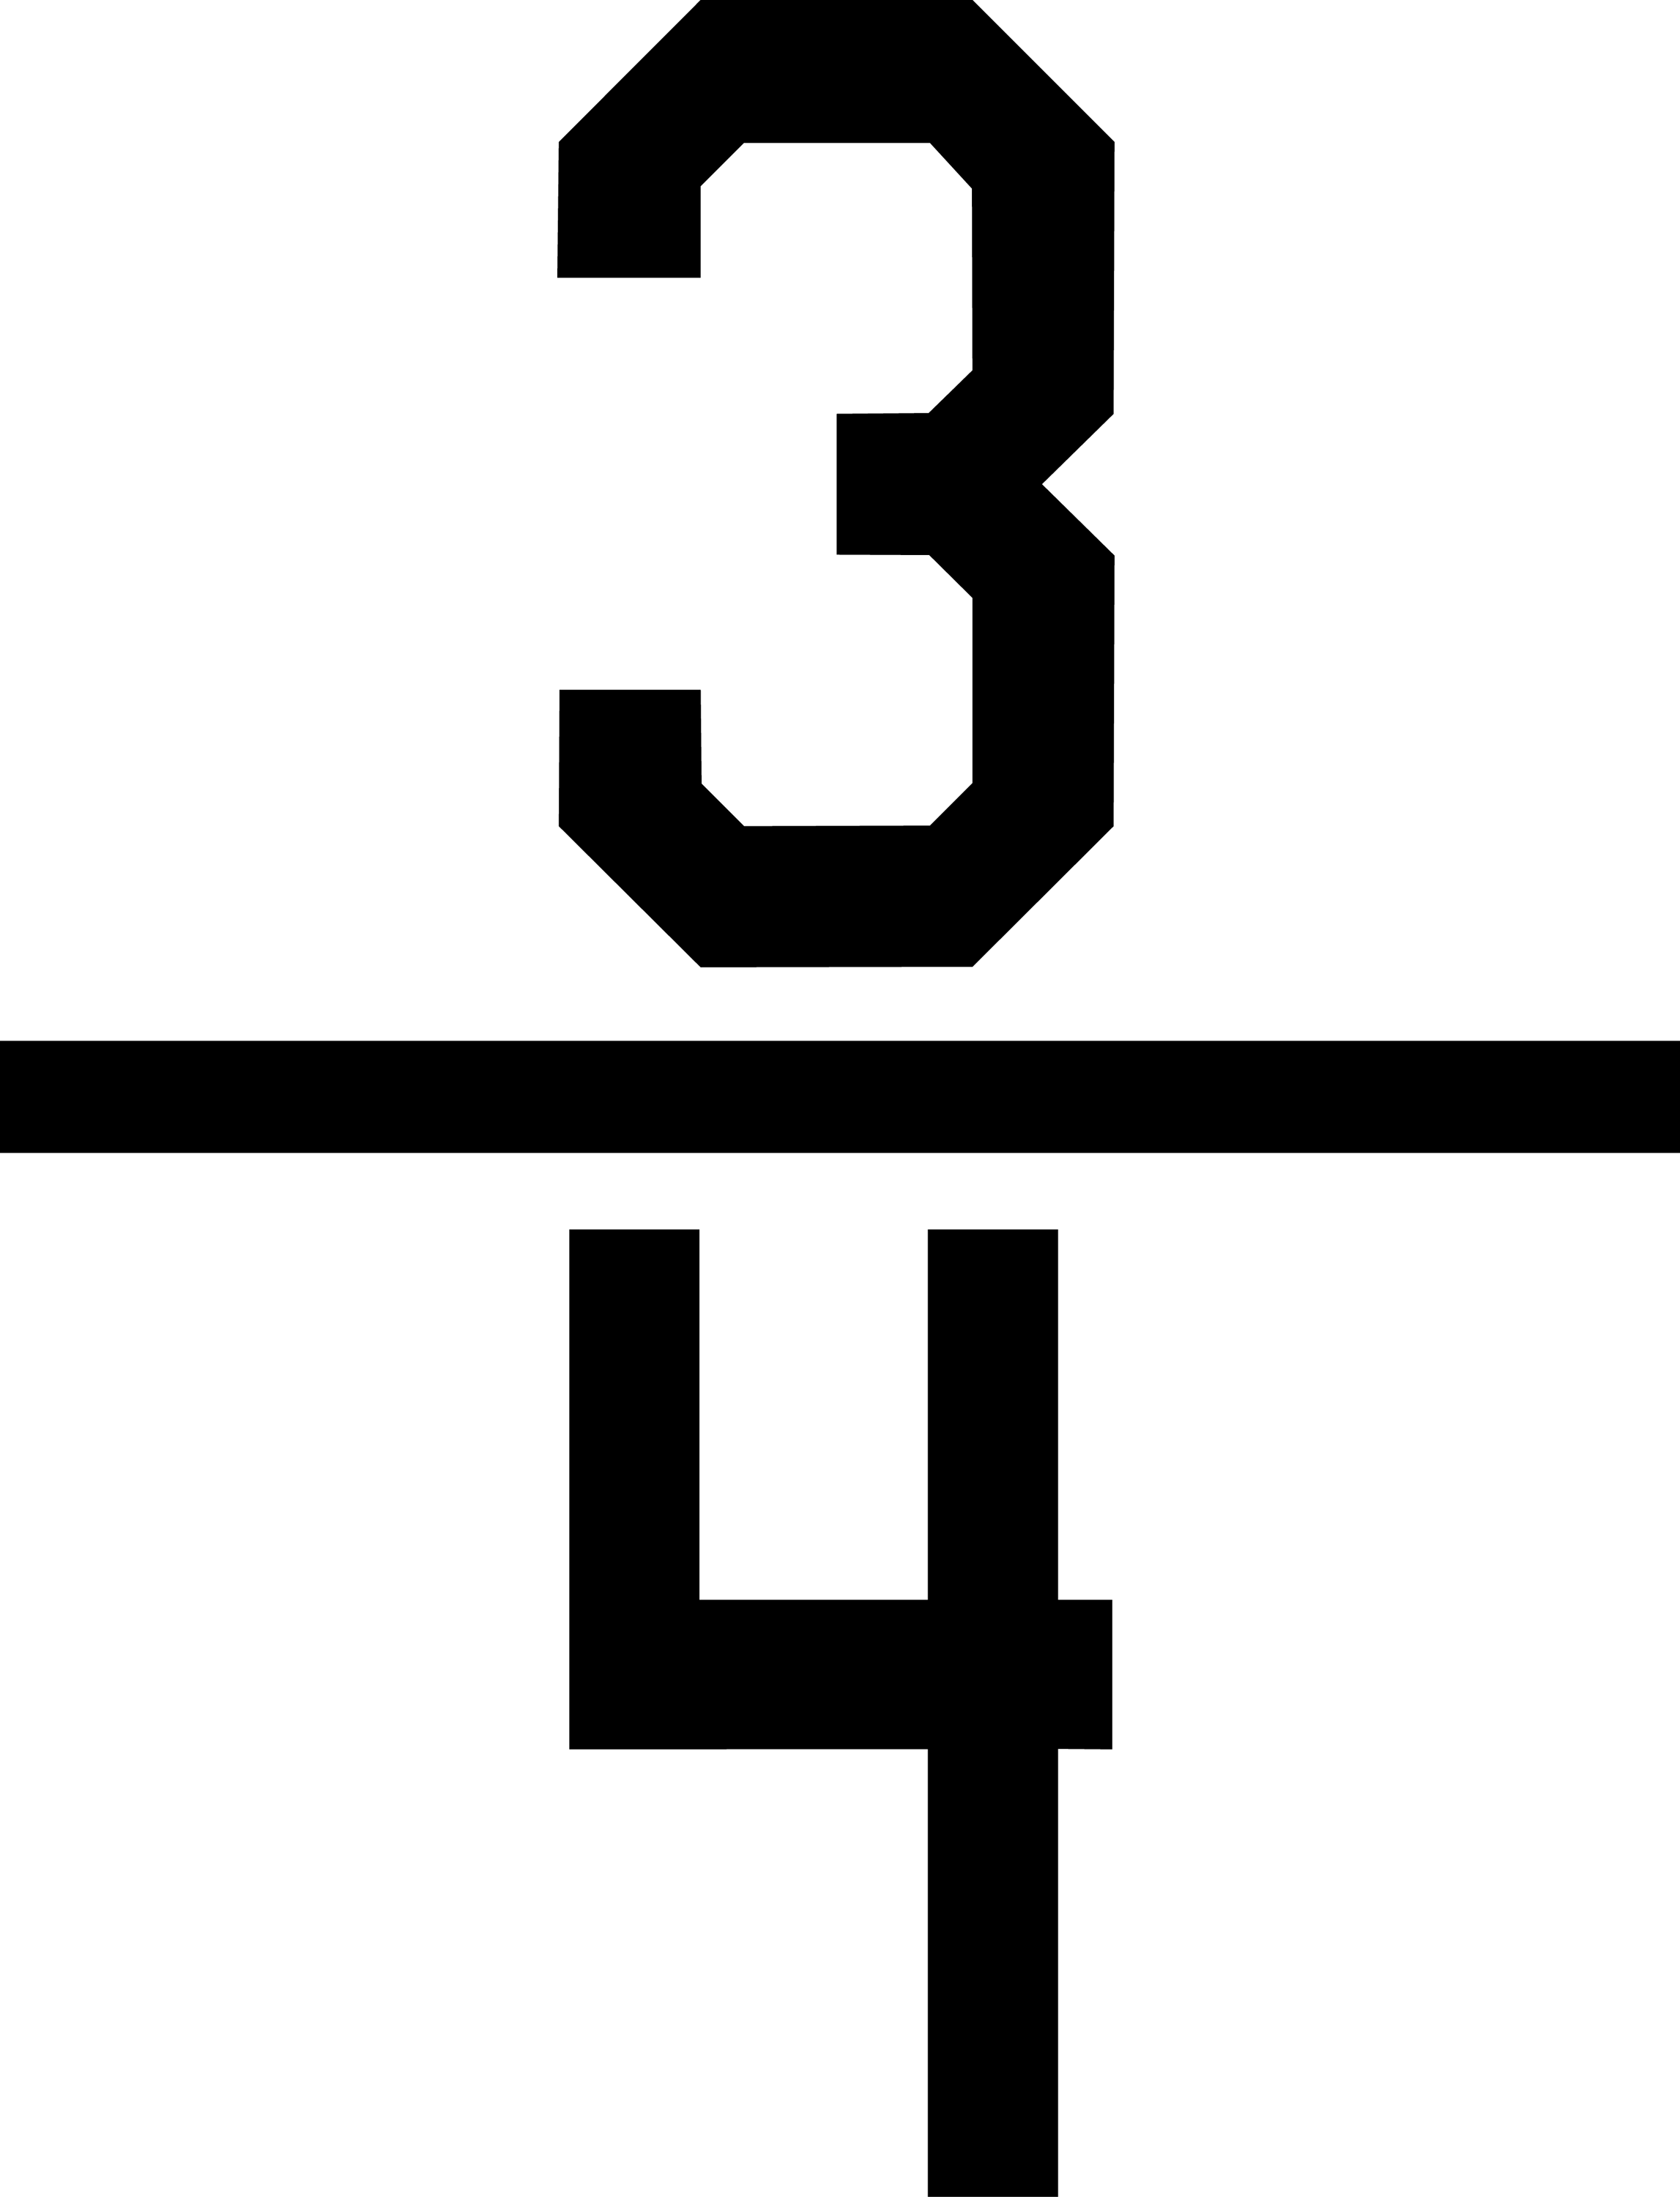 Numerical fraction 3/4